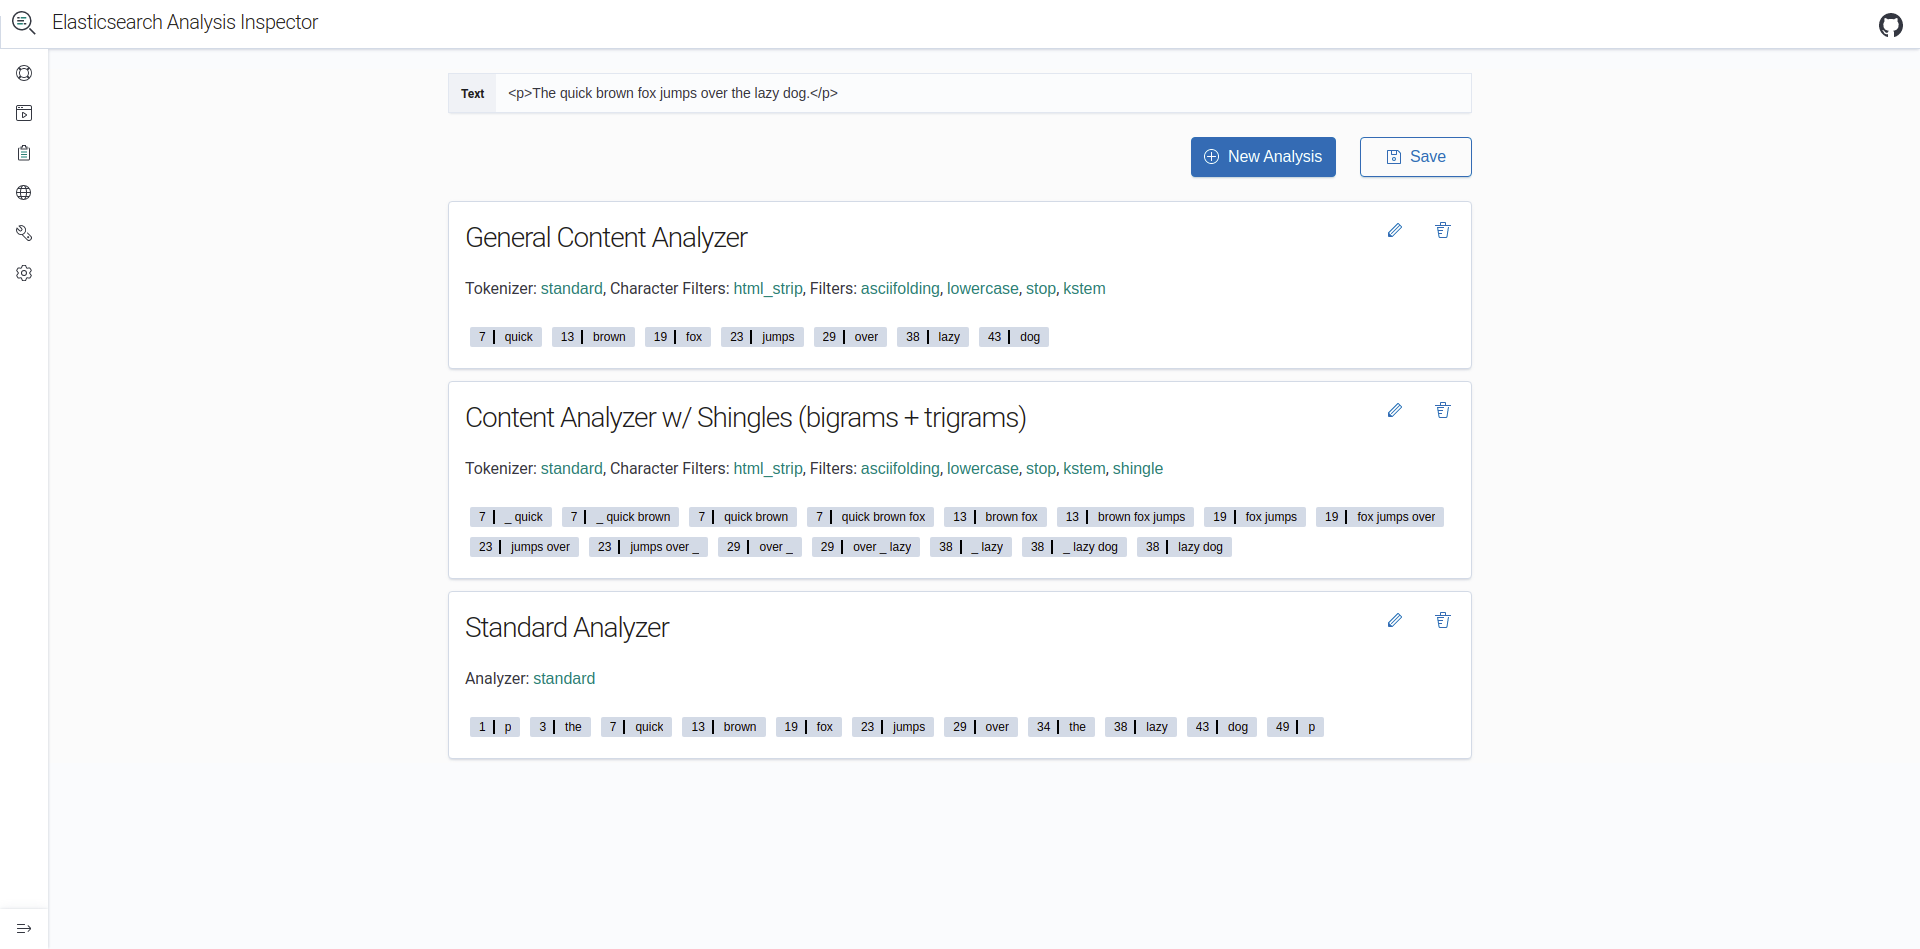 Complete Screenshot of Elasticsearch Analysis Inspector